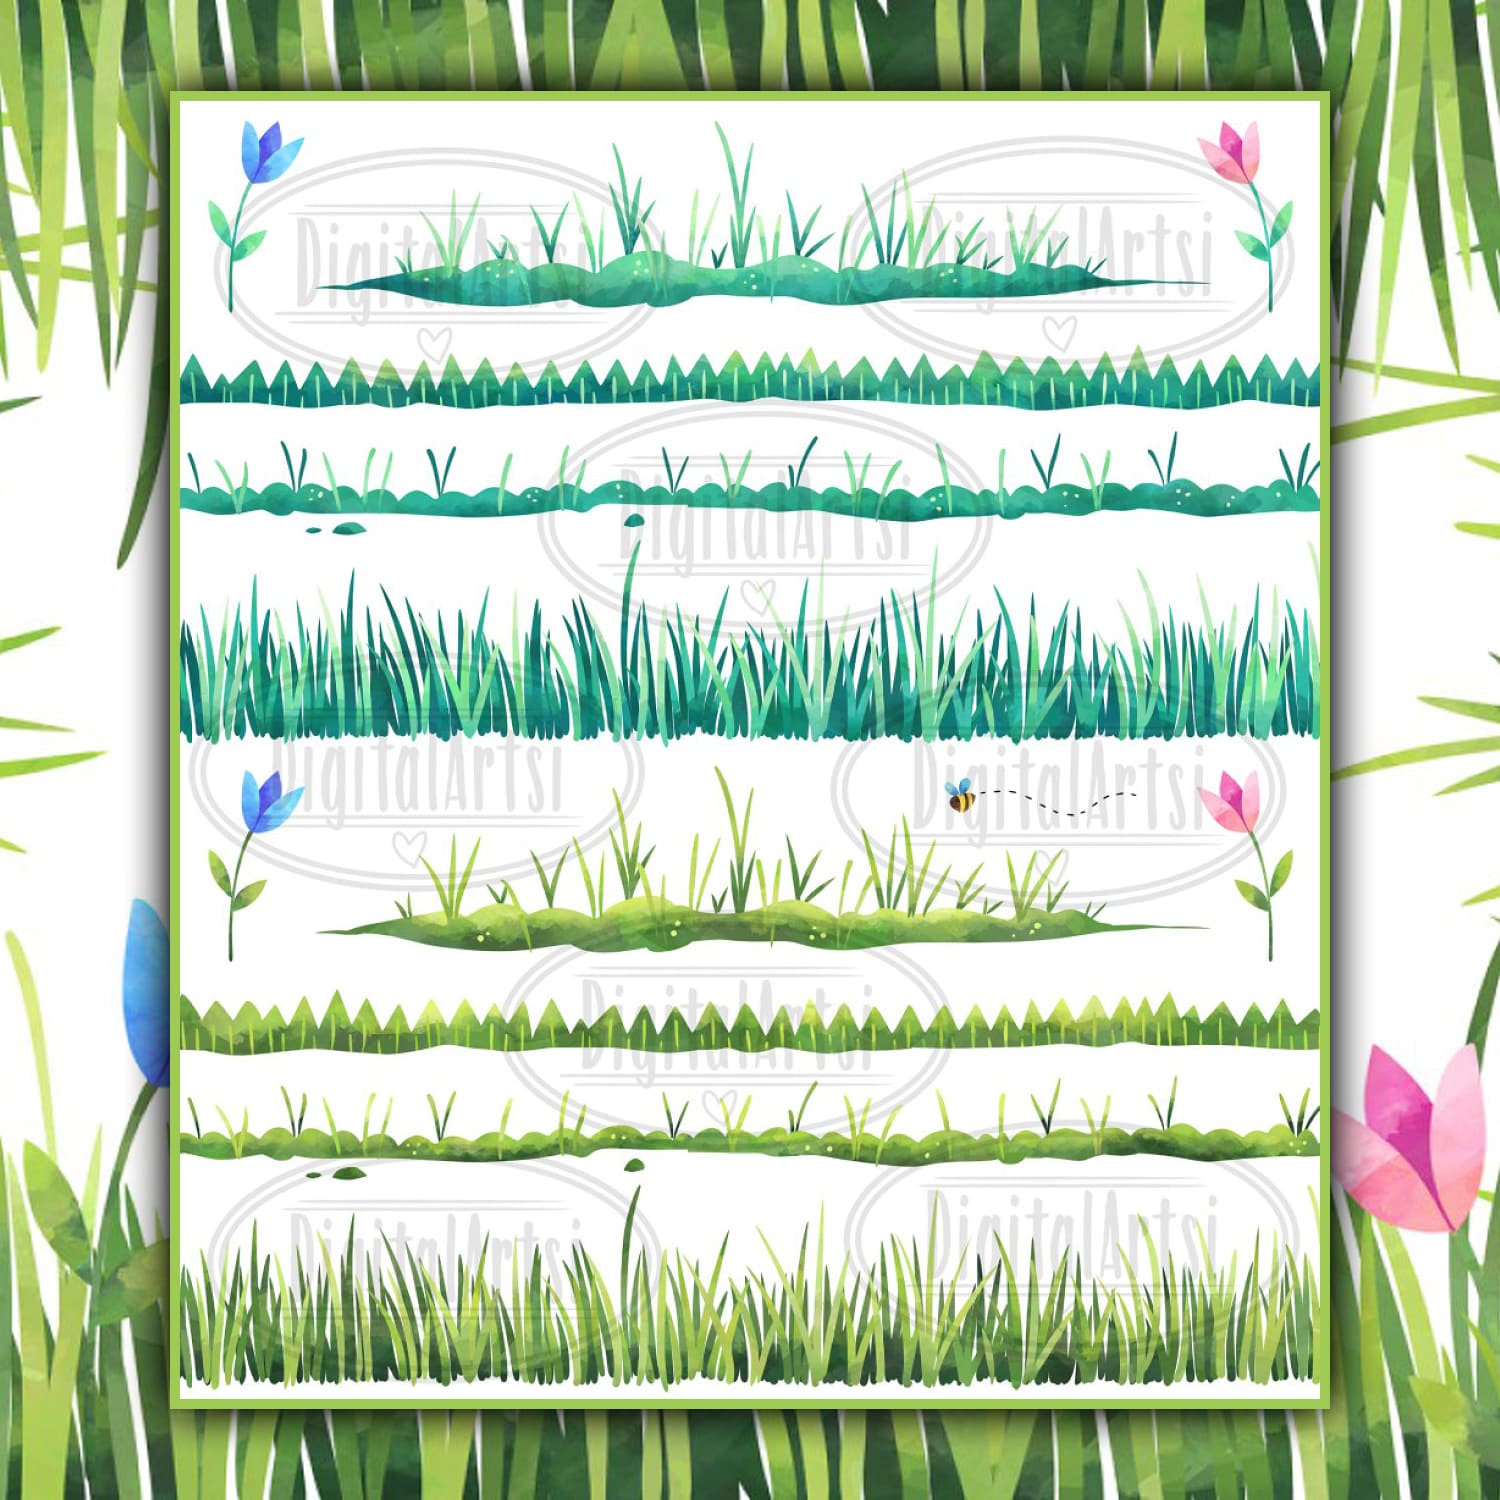 Watercolor Grass Clipart cover.